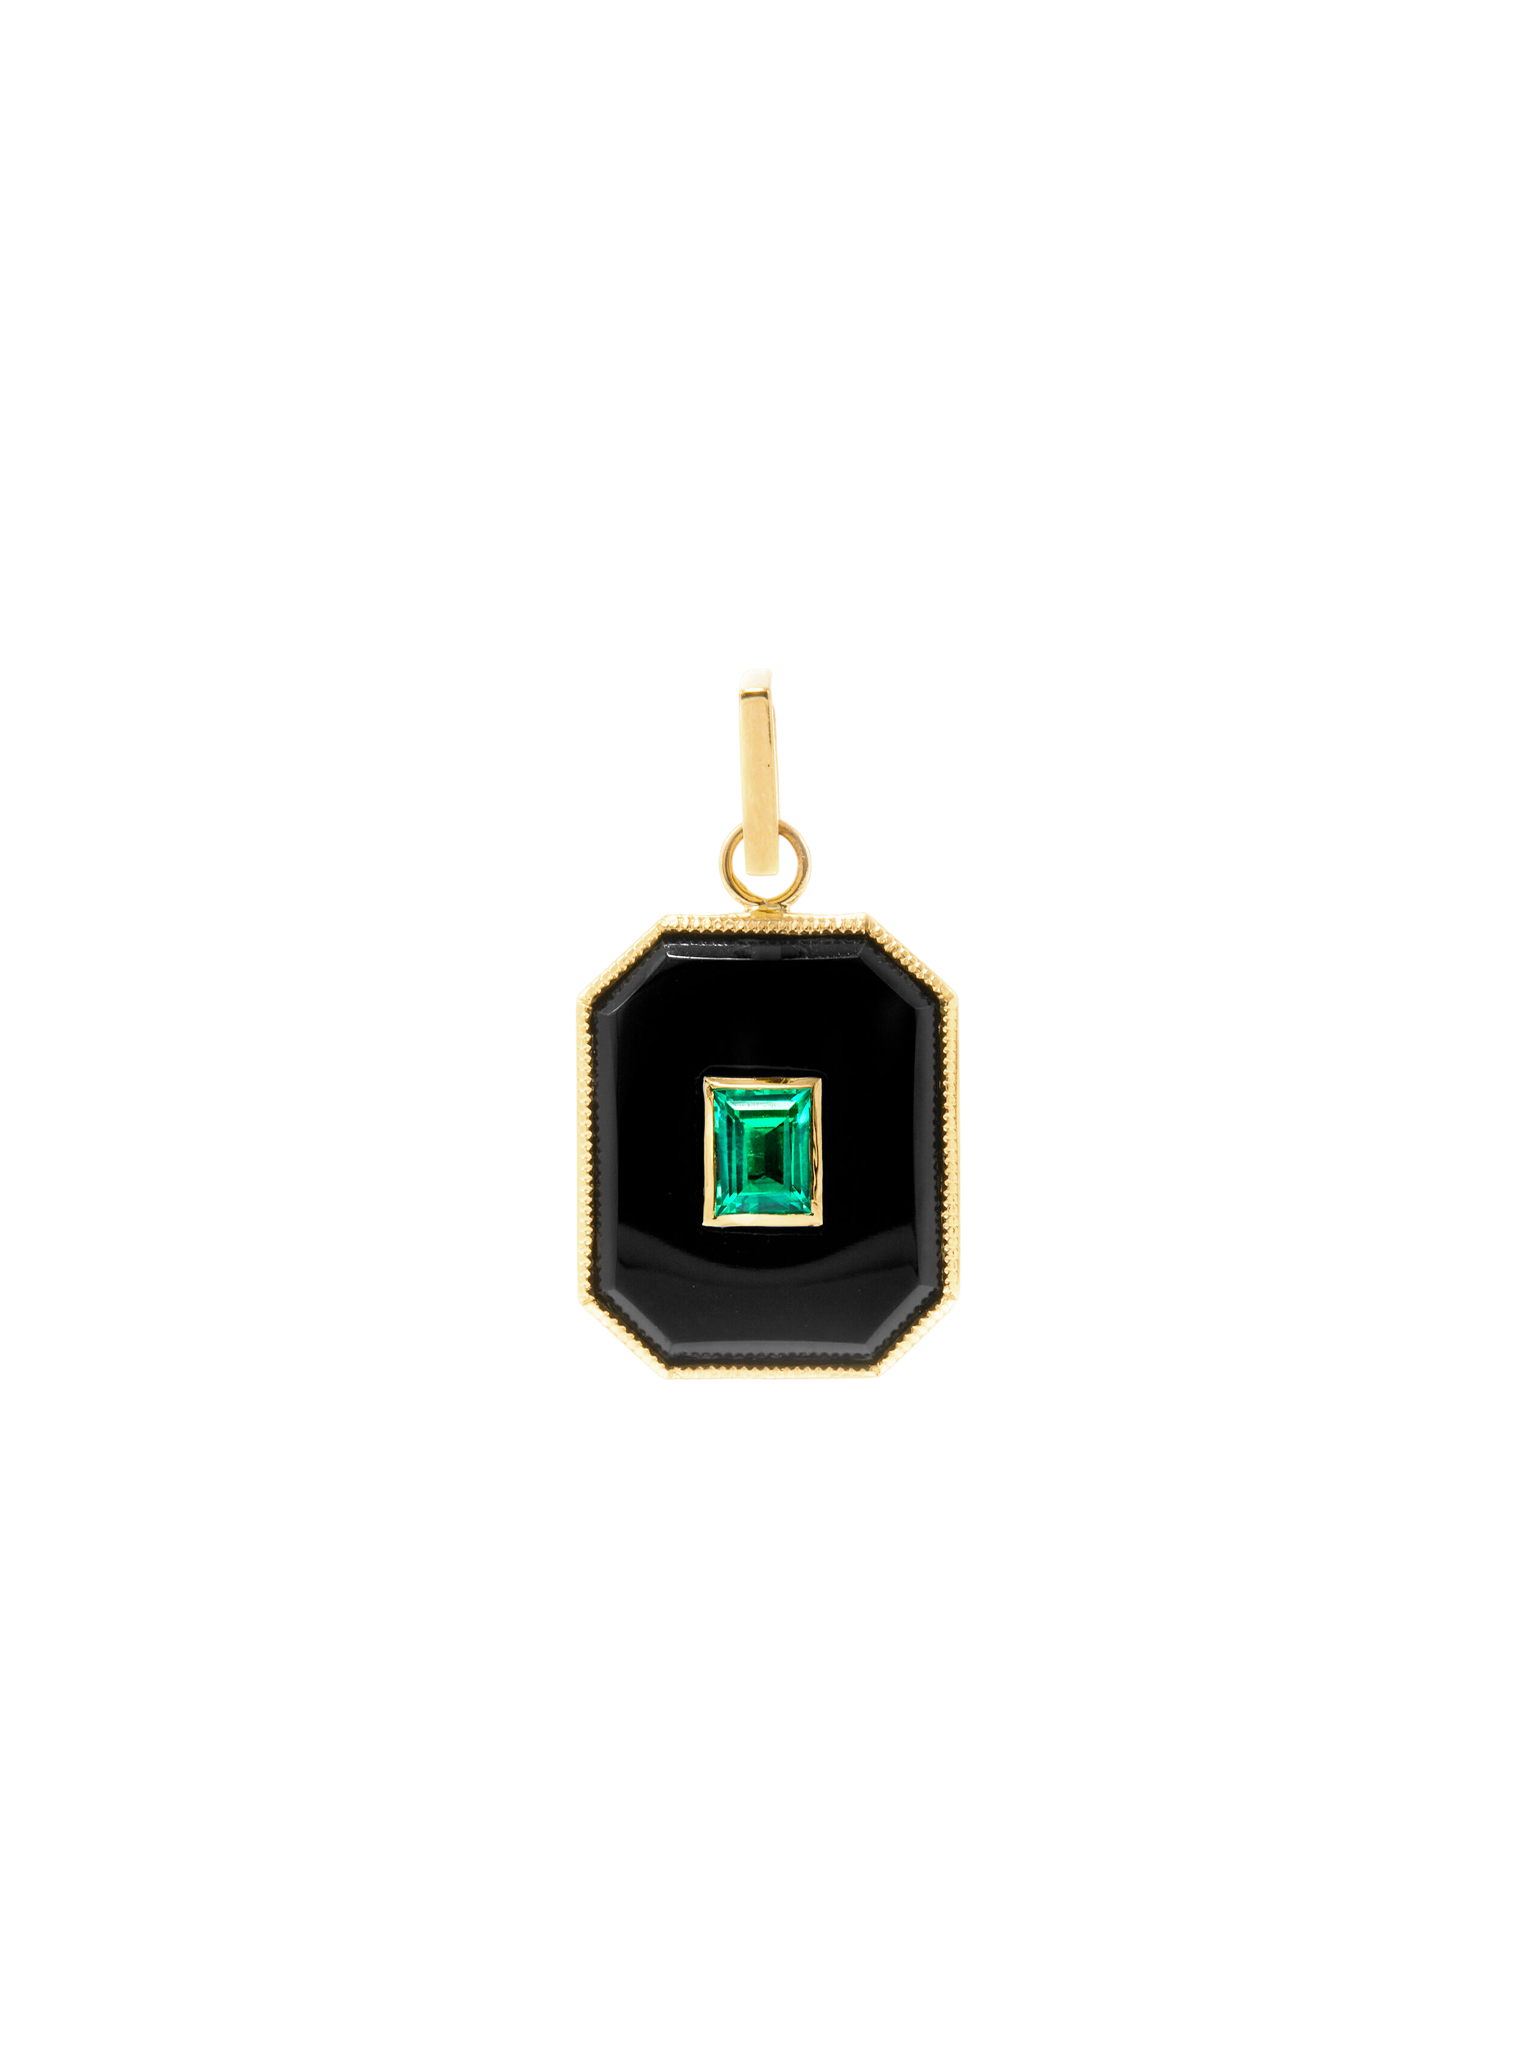 Onyx emerald charm